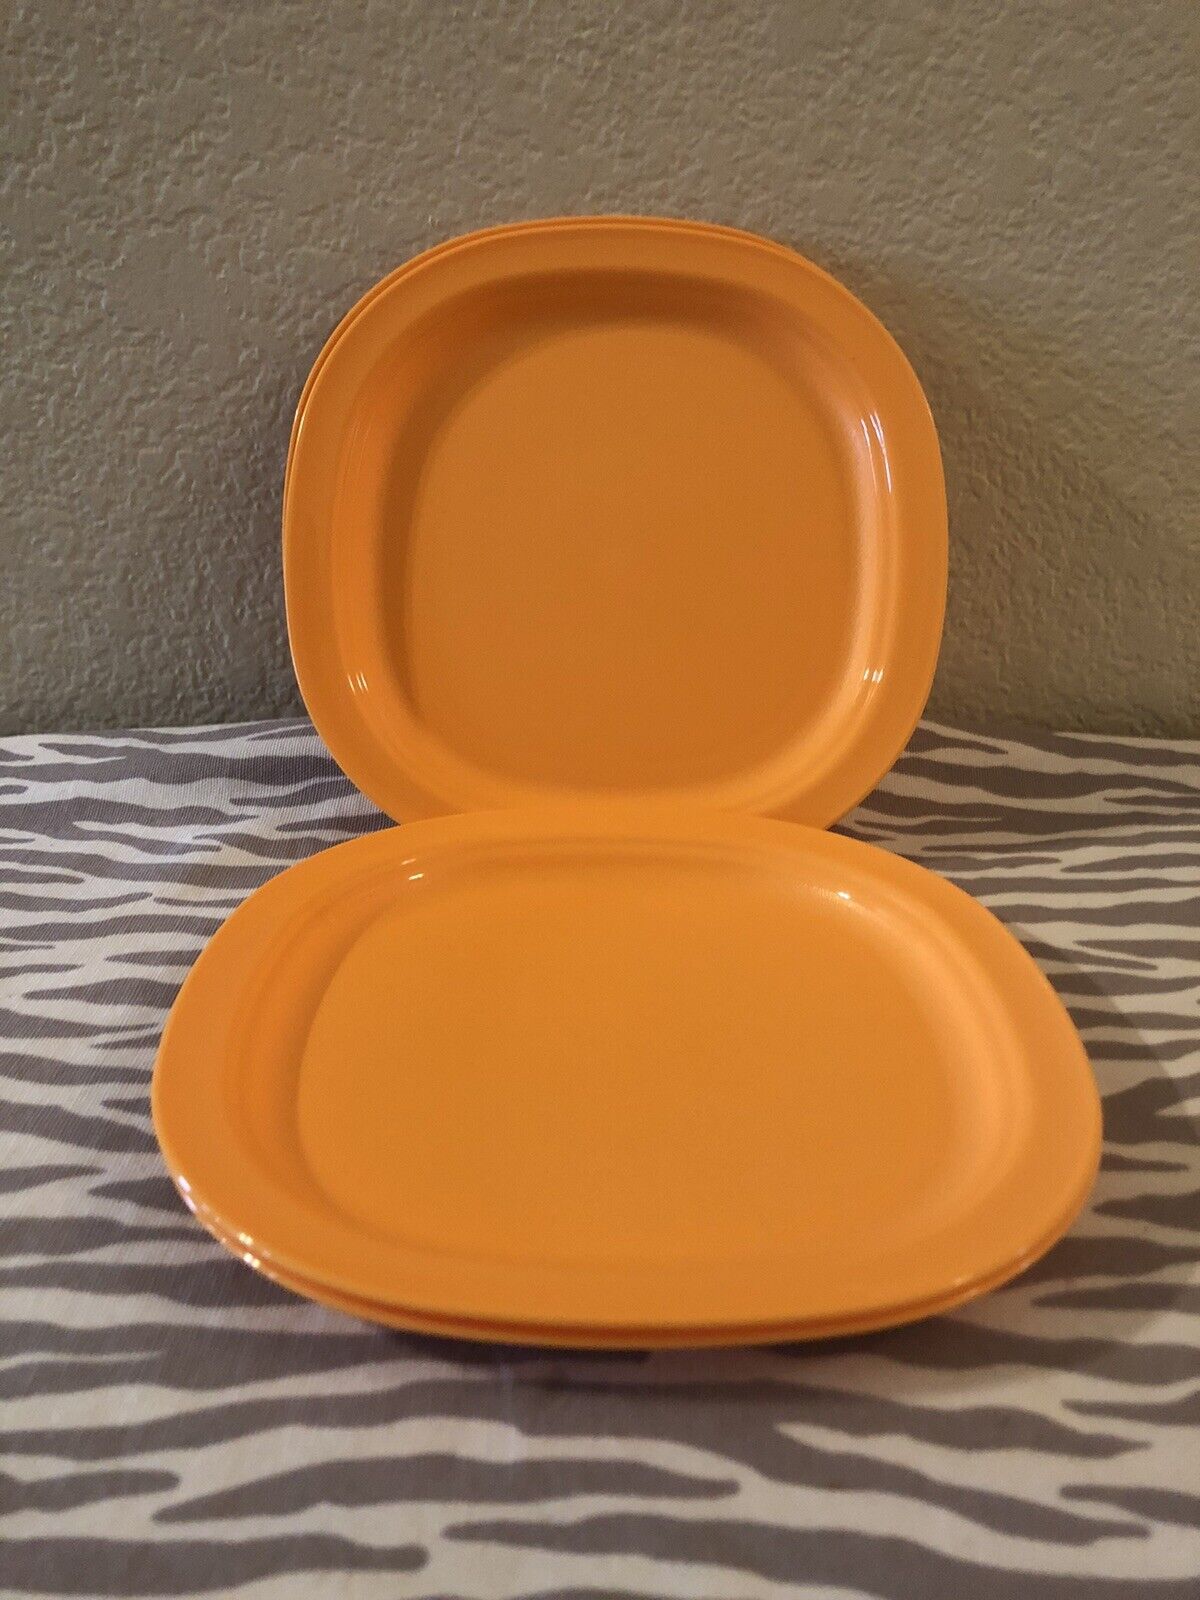 Tupperware Luncheon Plates Dessert Plates Set of 4 Orange 7 3/4” New Tupperware - фотография #3